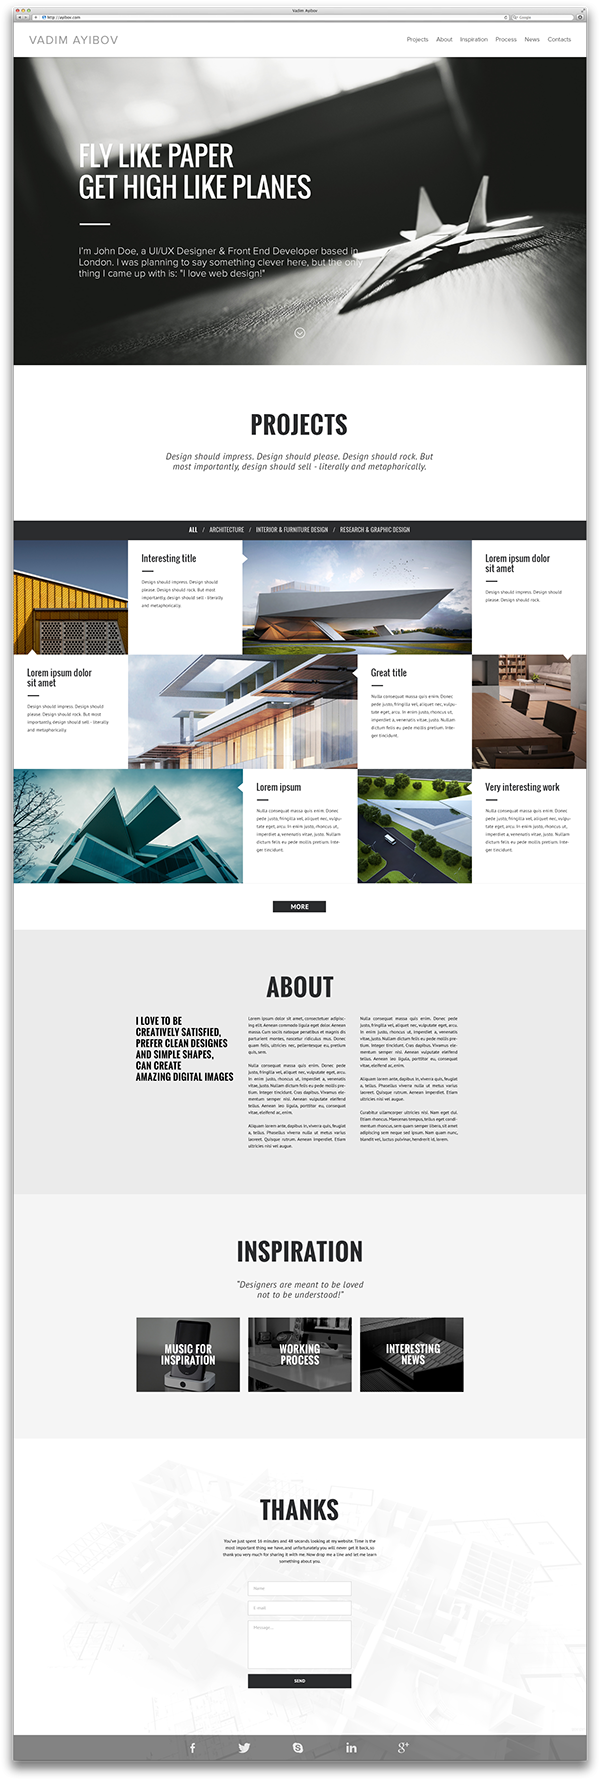 Website Webdesign brand black and white architect portfolio business card letter